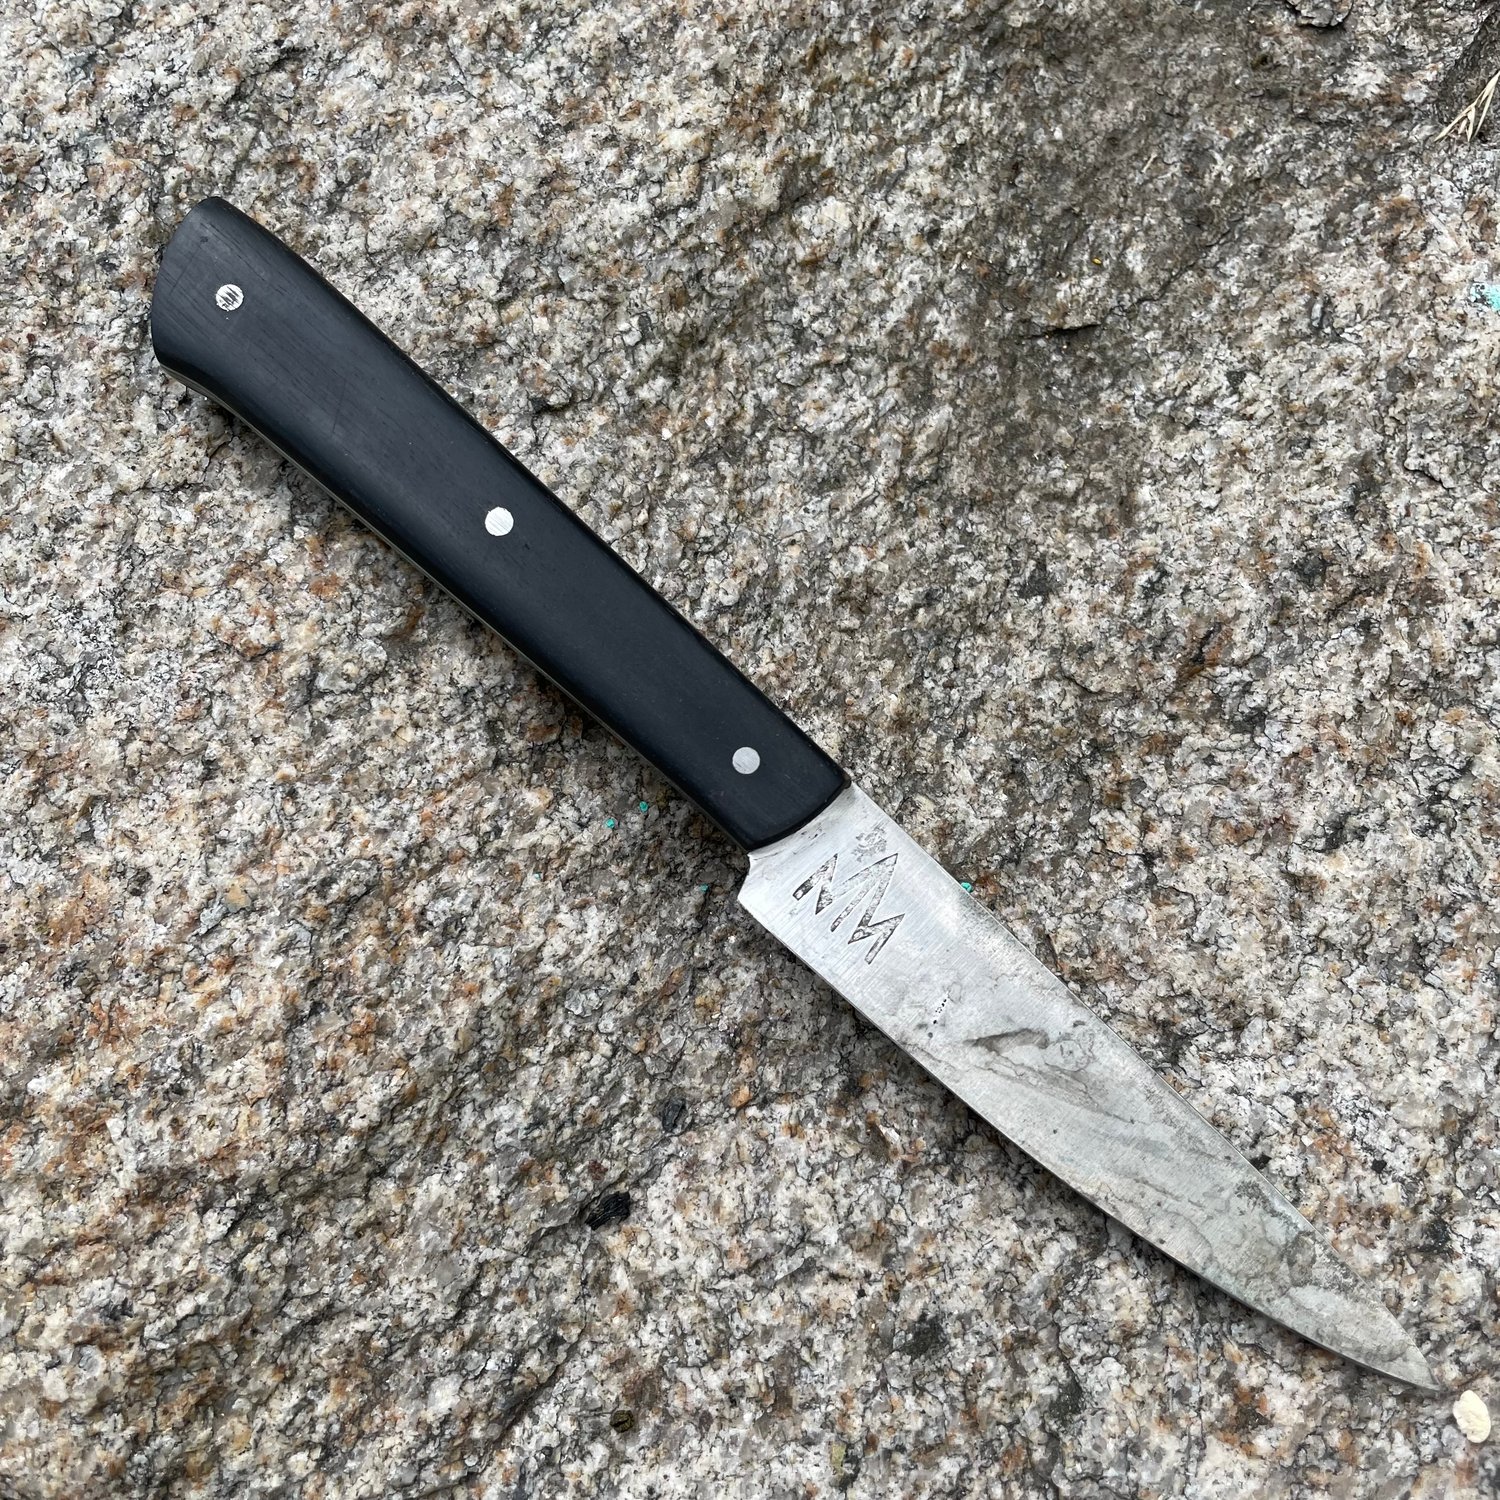 Eternal Copper Knife Set PG-KGI-3955